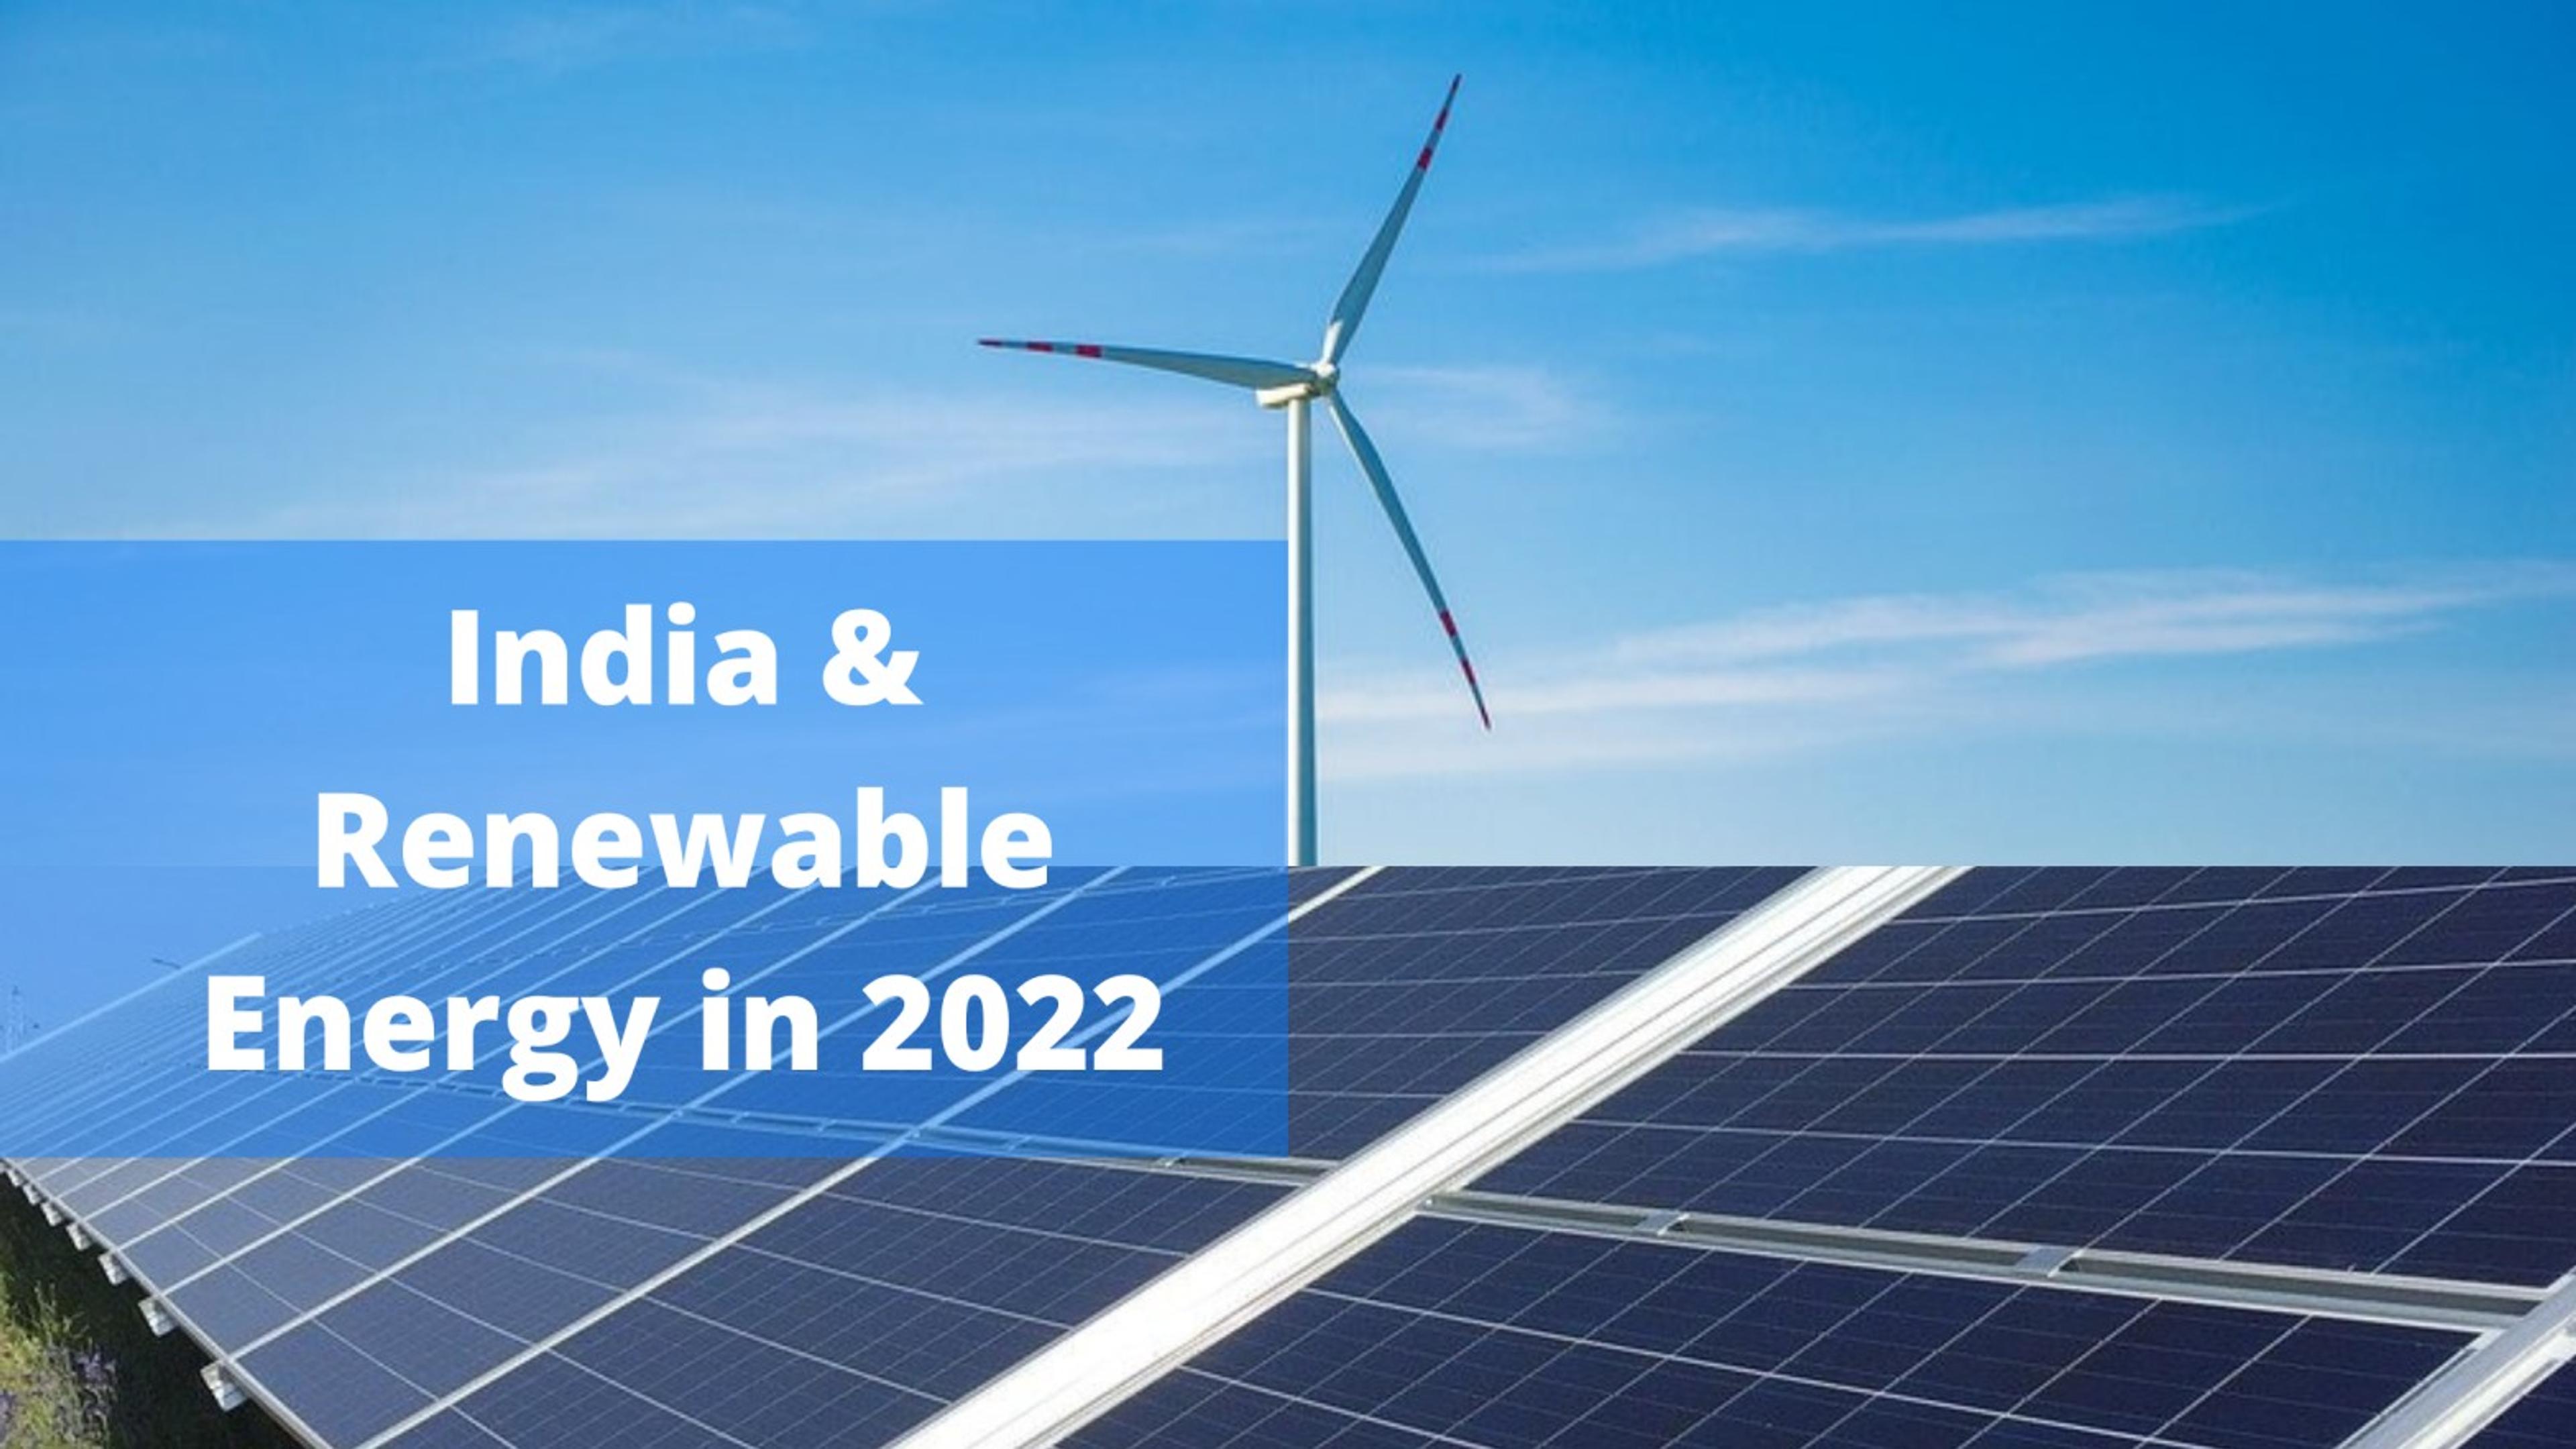 India & Renewable Energy in 2022